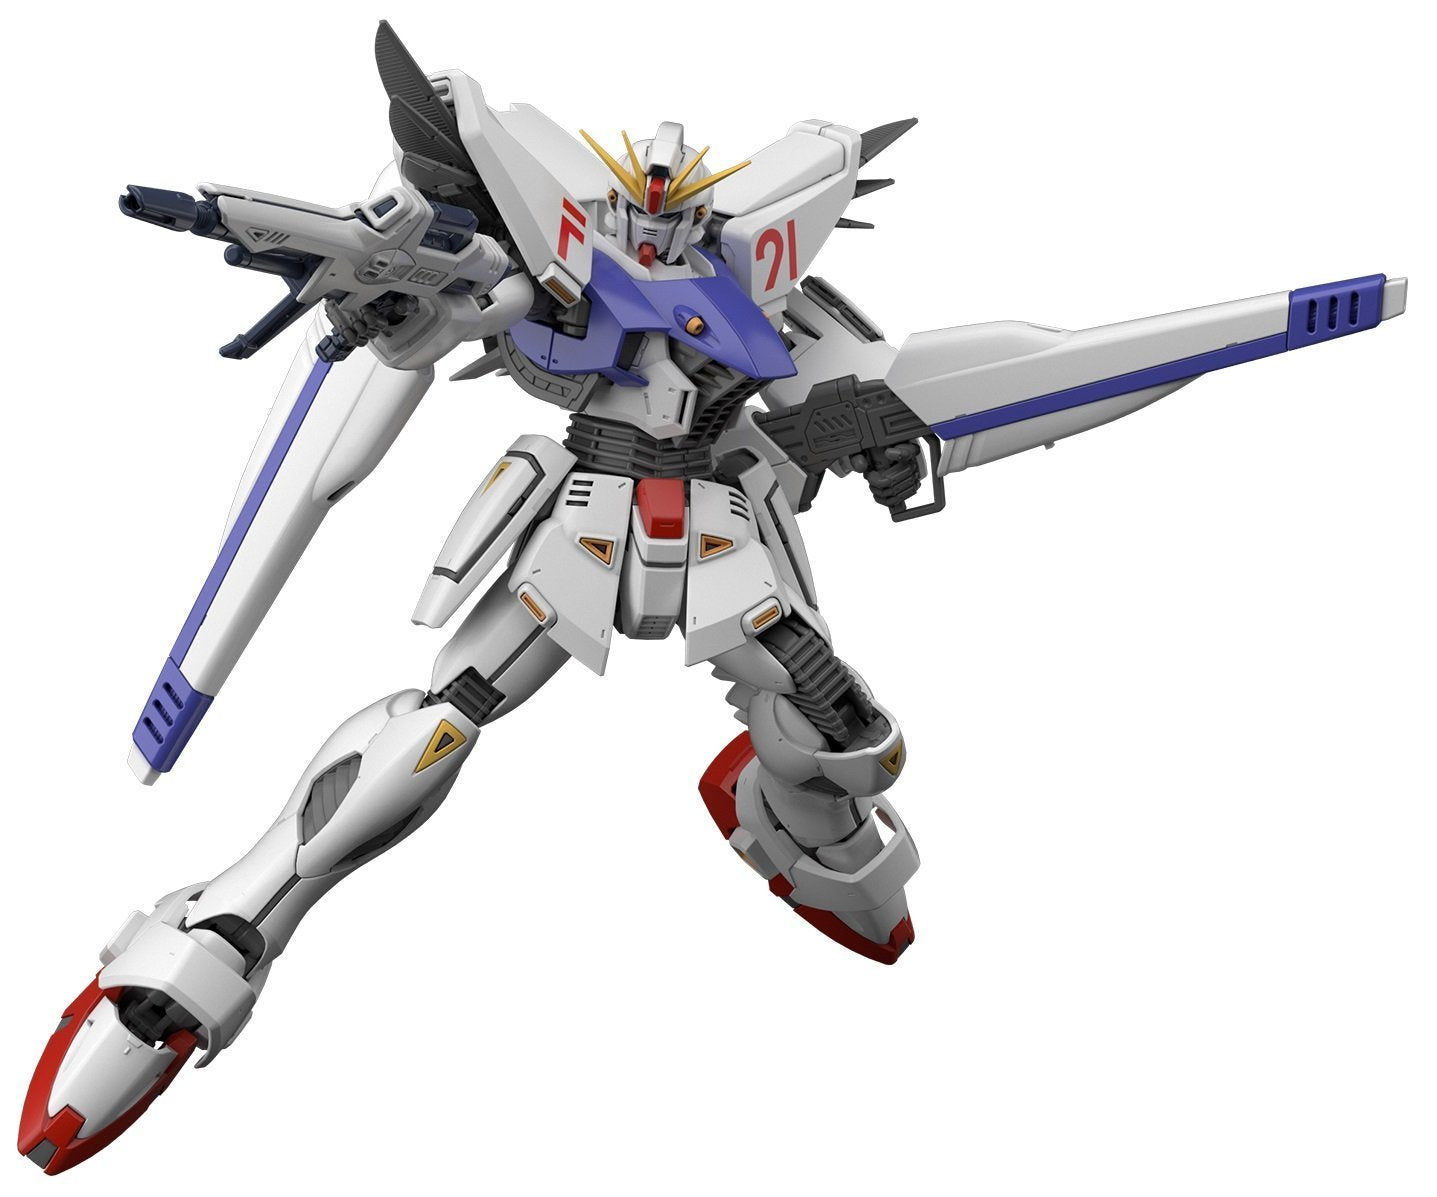 Gundam F91 Ver 2.0 Bandai MG 1:100 Scale Model Kit